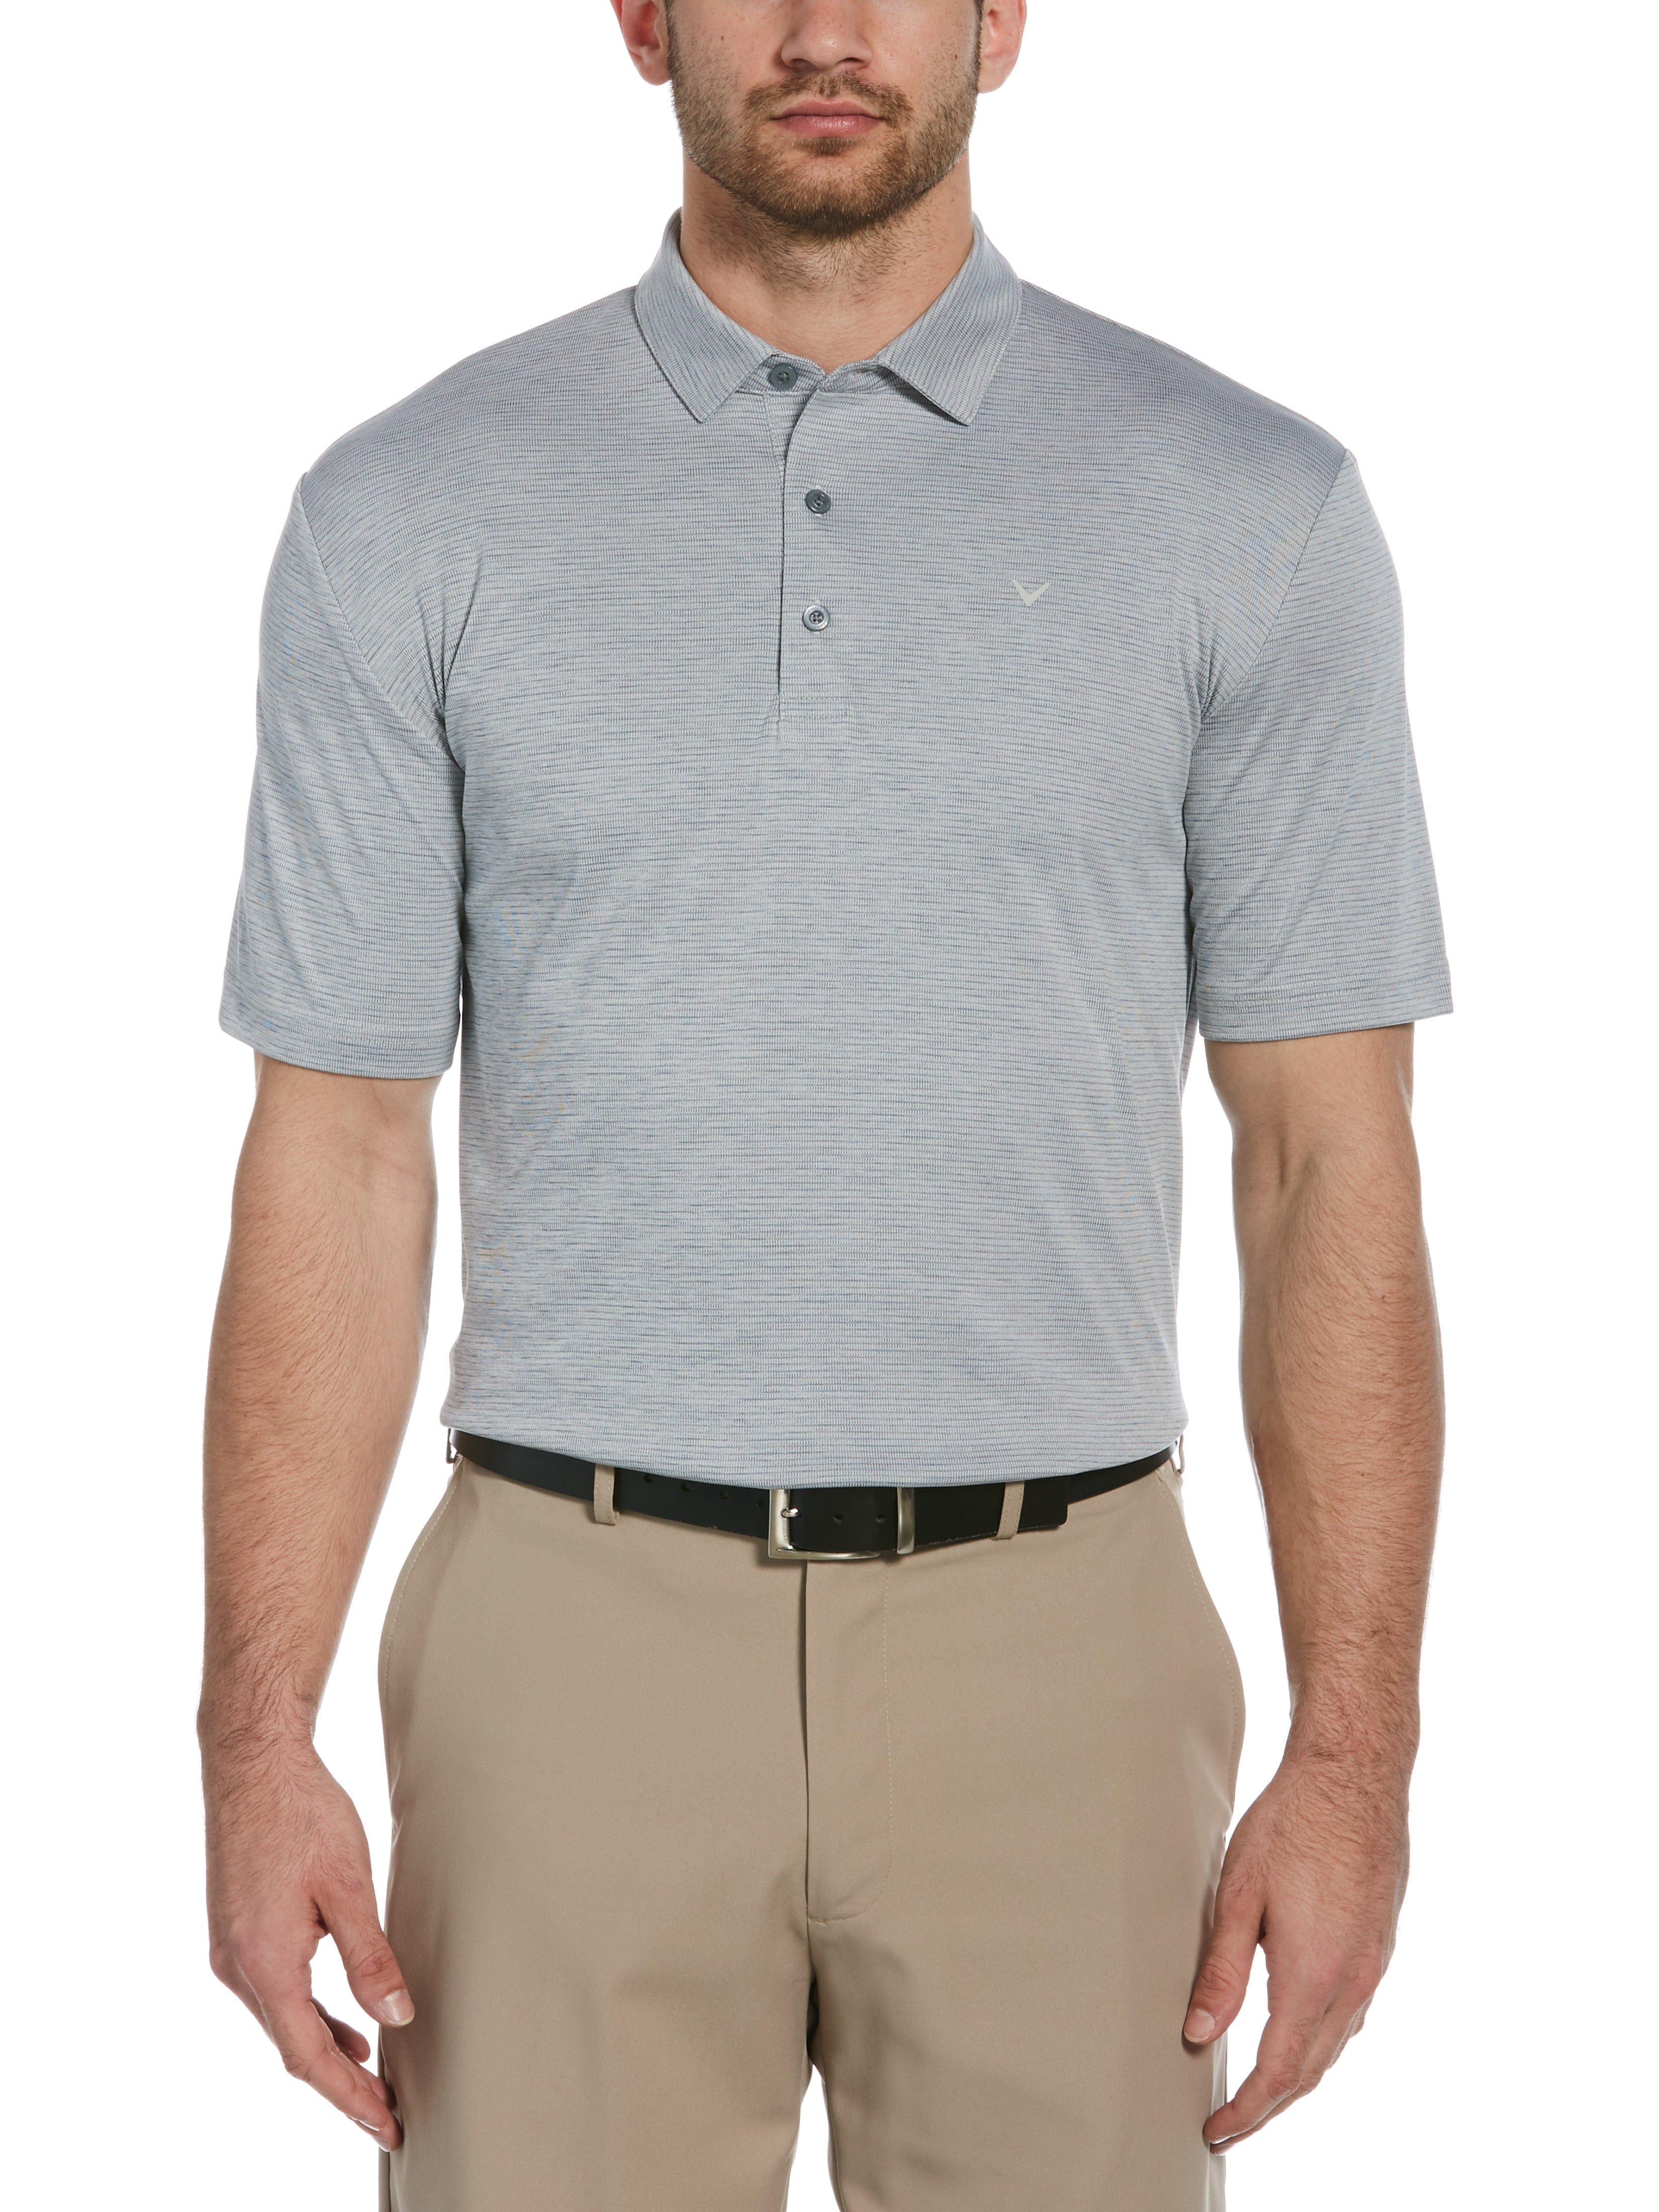 Callaway Apparel Mens Solid Texture Golf Polo Shirt, Size 3XL, Tradewinds Heather Gray, 100% Polyester | Golf Apparel Shop